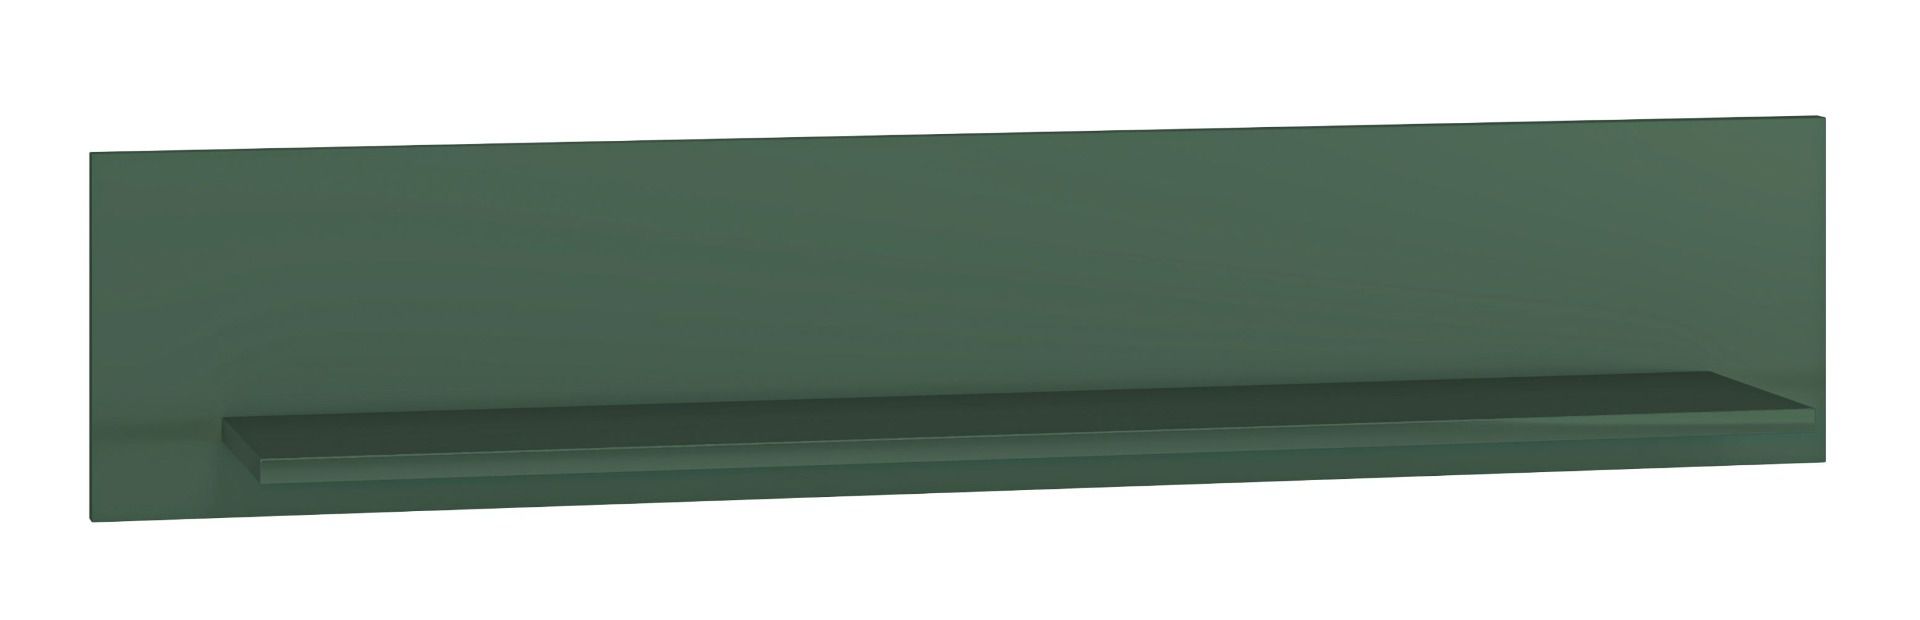 Hängeregal / Wandregal Inari 08, Farbe: Waldgrün - Abmessungen: 23 x 120 x 22 cm (H x B x T)